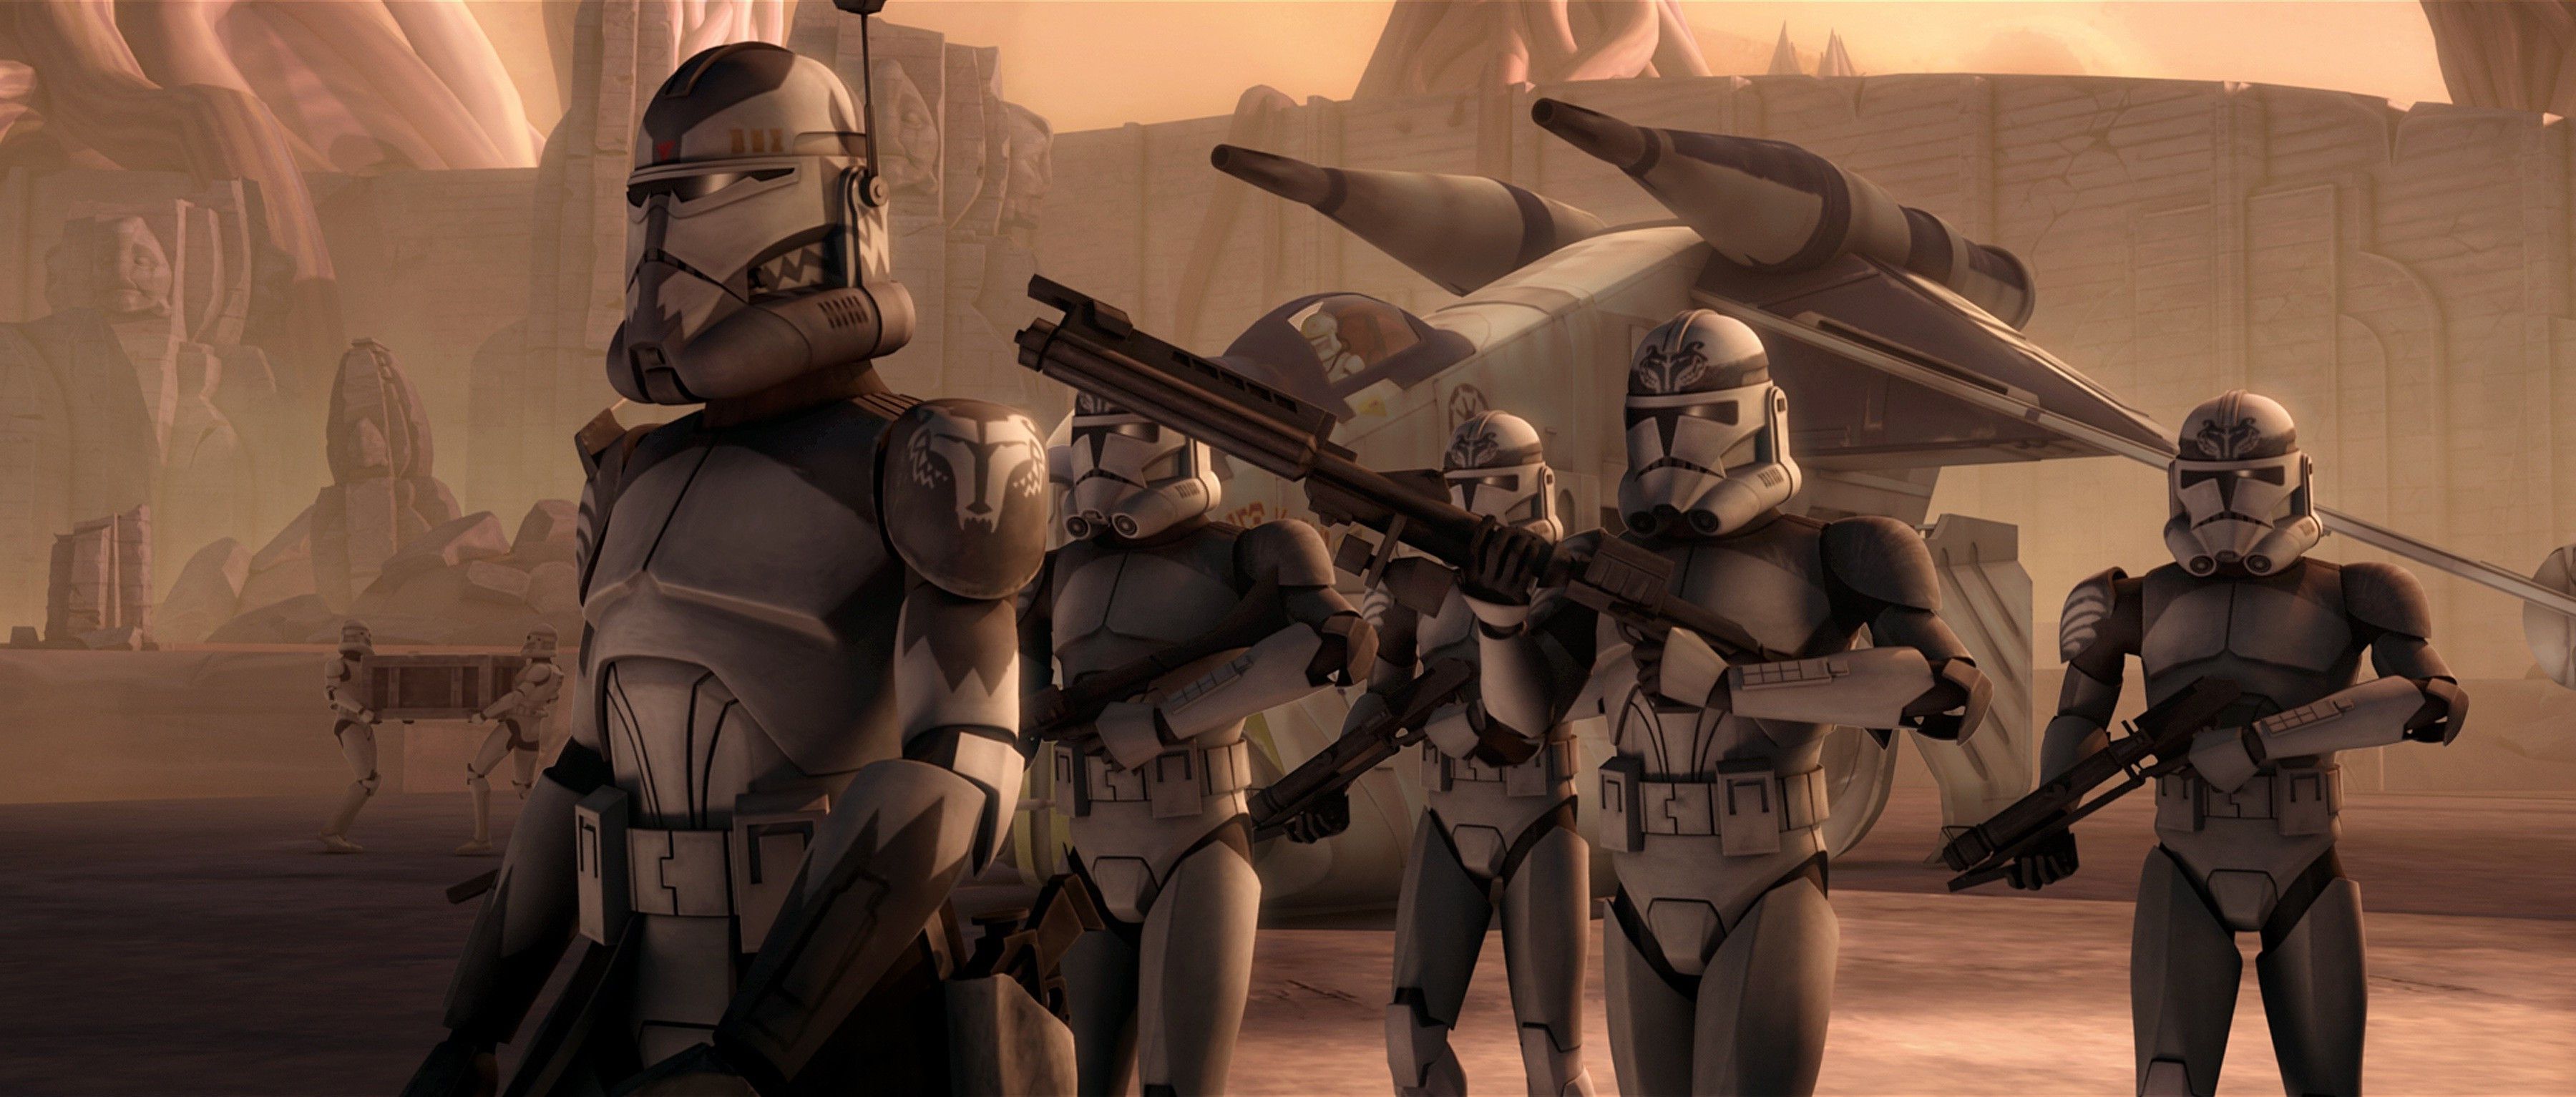 Star Wars Clone Troopers Wallpaper